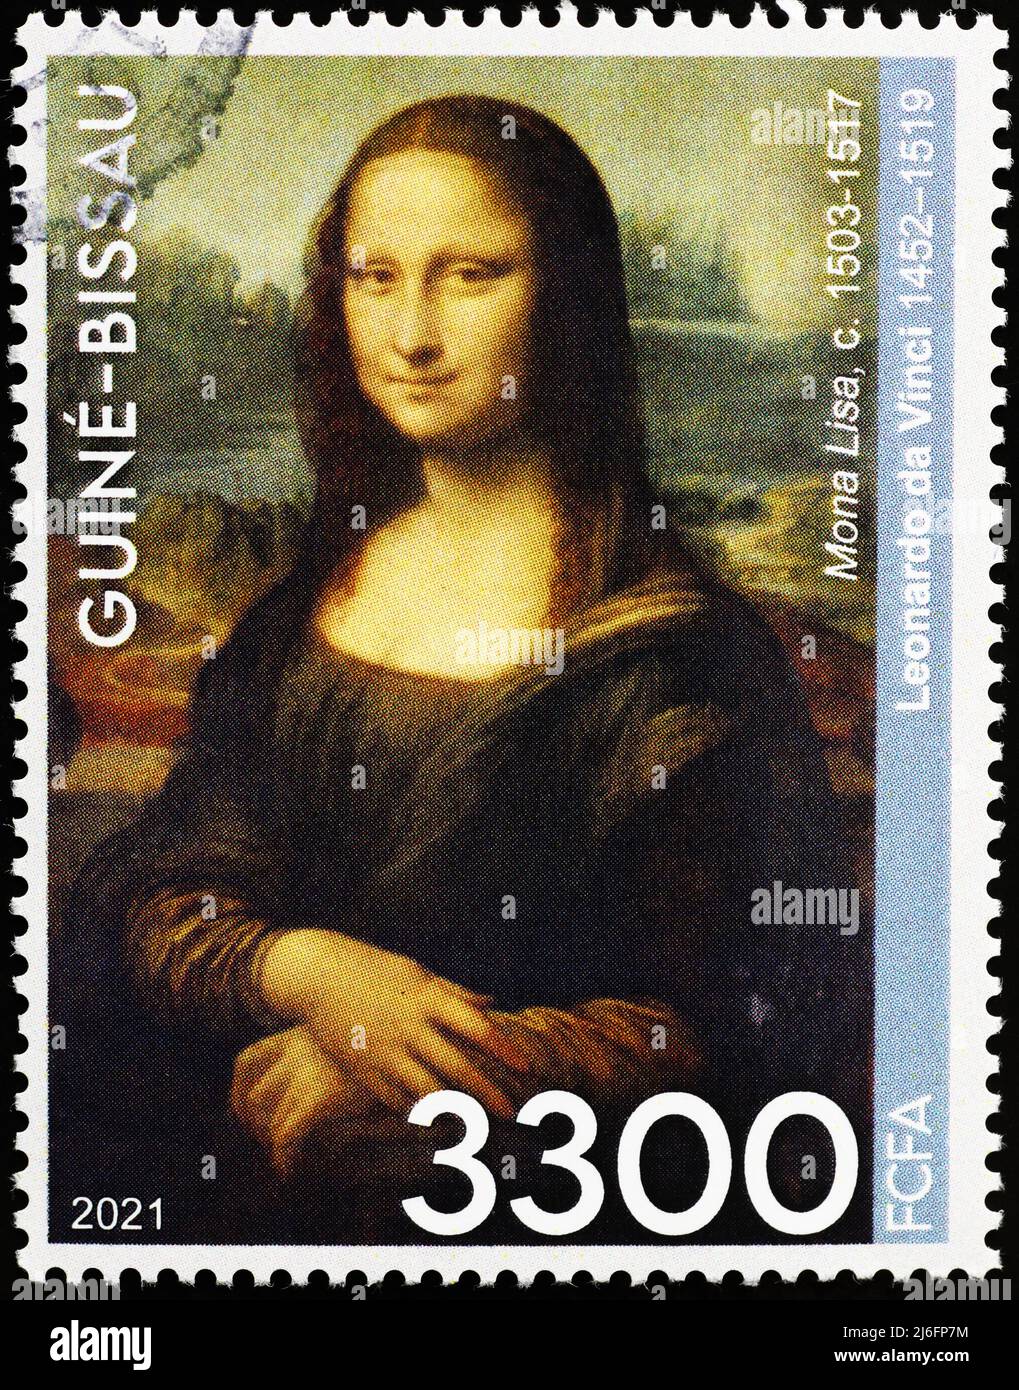 Mona Lisa by Leonardo on stamp from Guinea Bissau Stock Photo